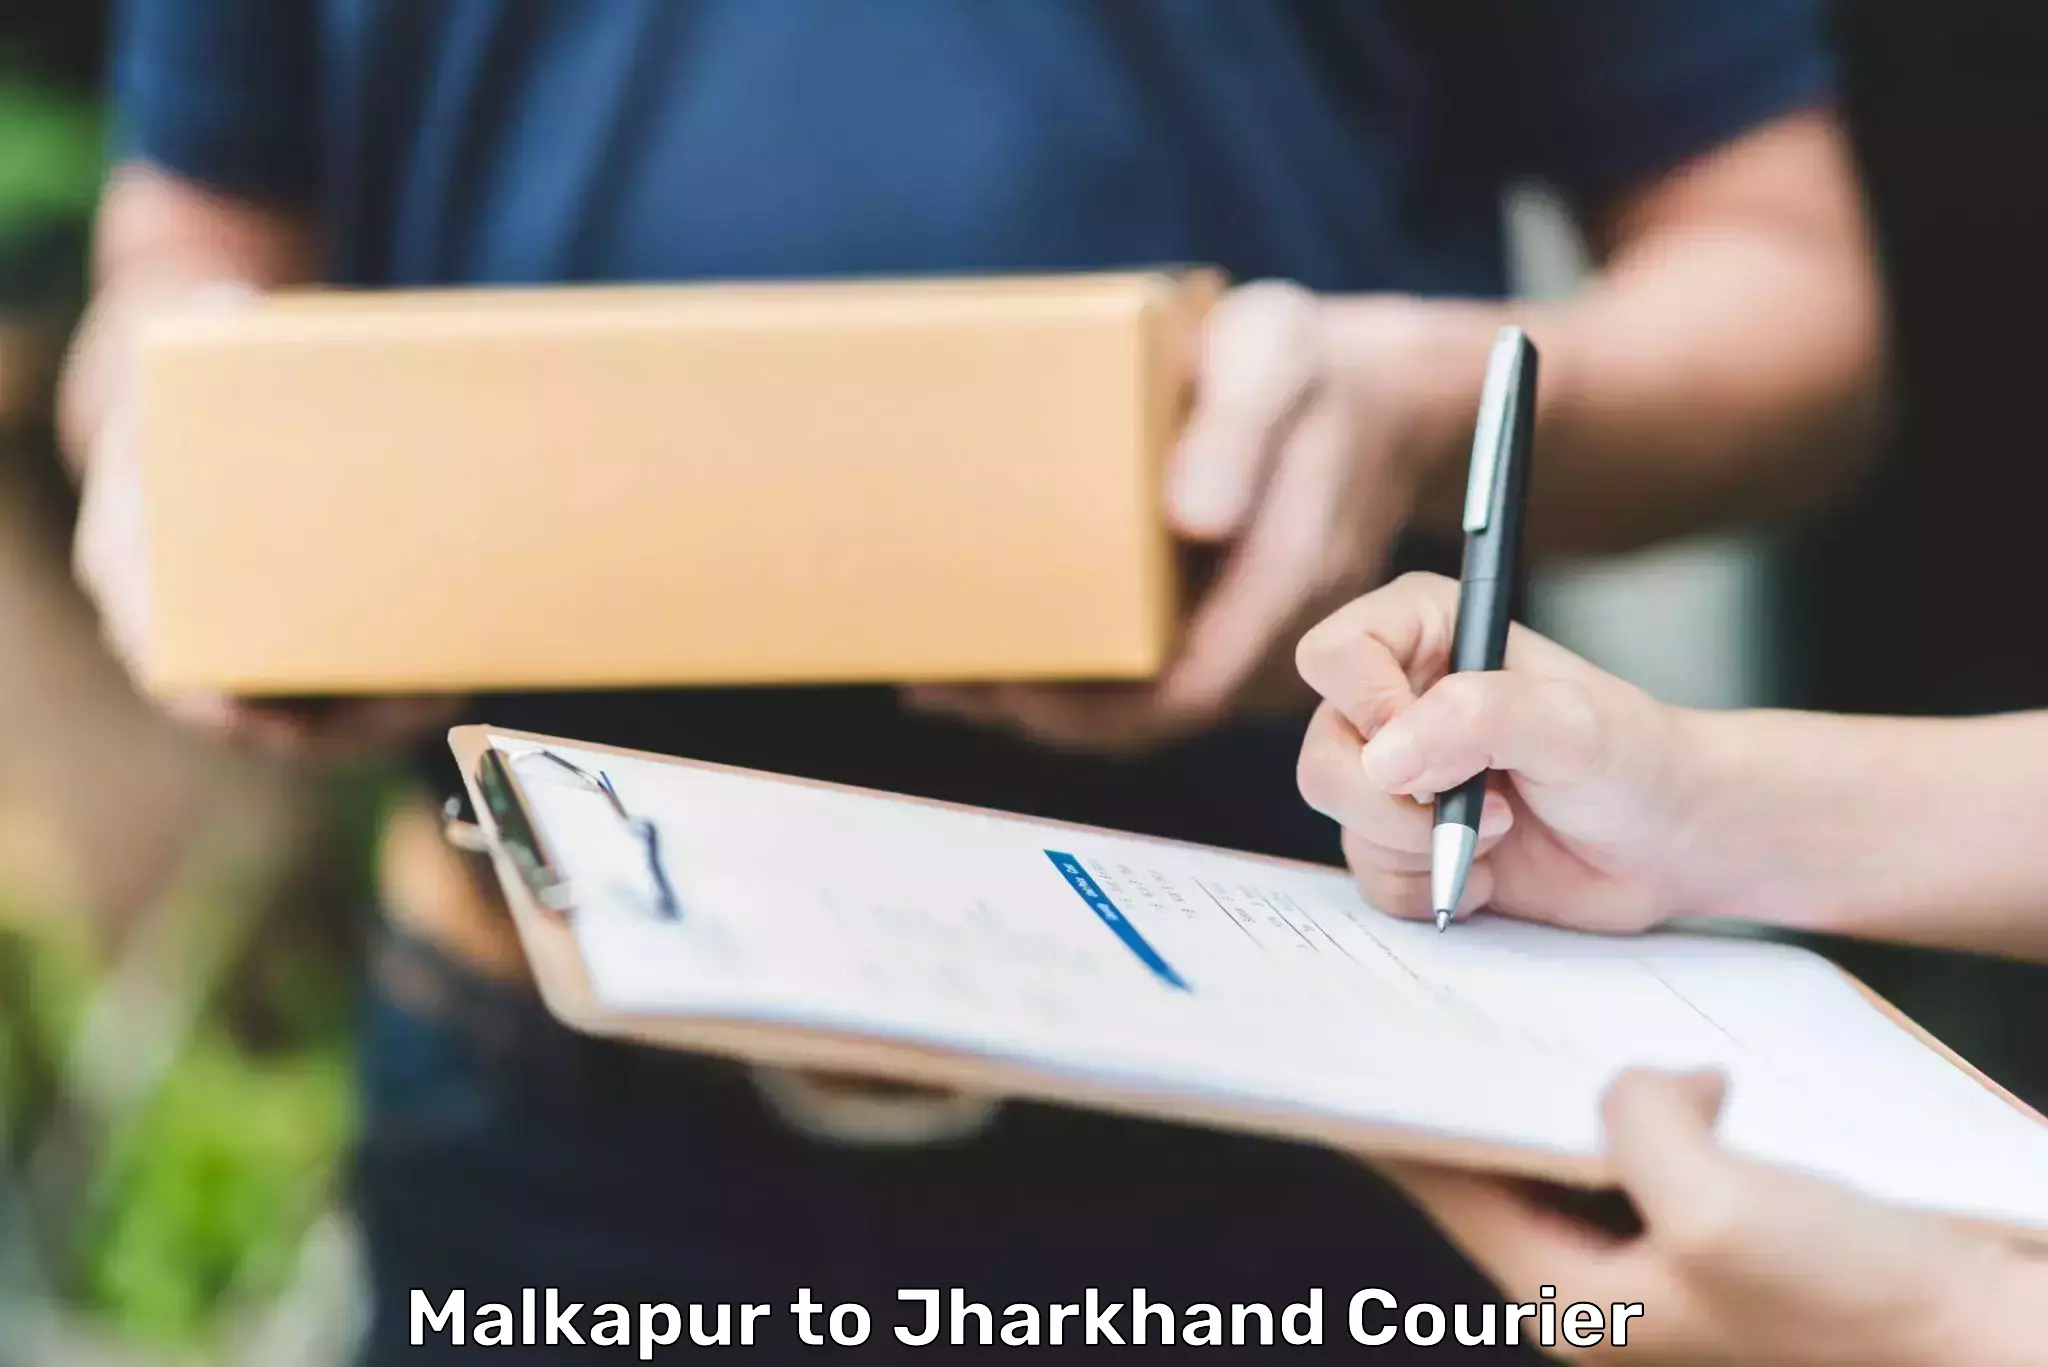 Courier service efficiency Malkapur to East Singhbhum